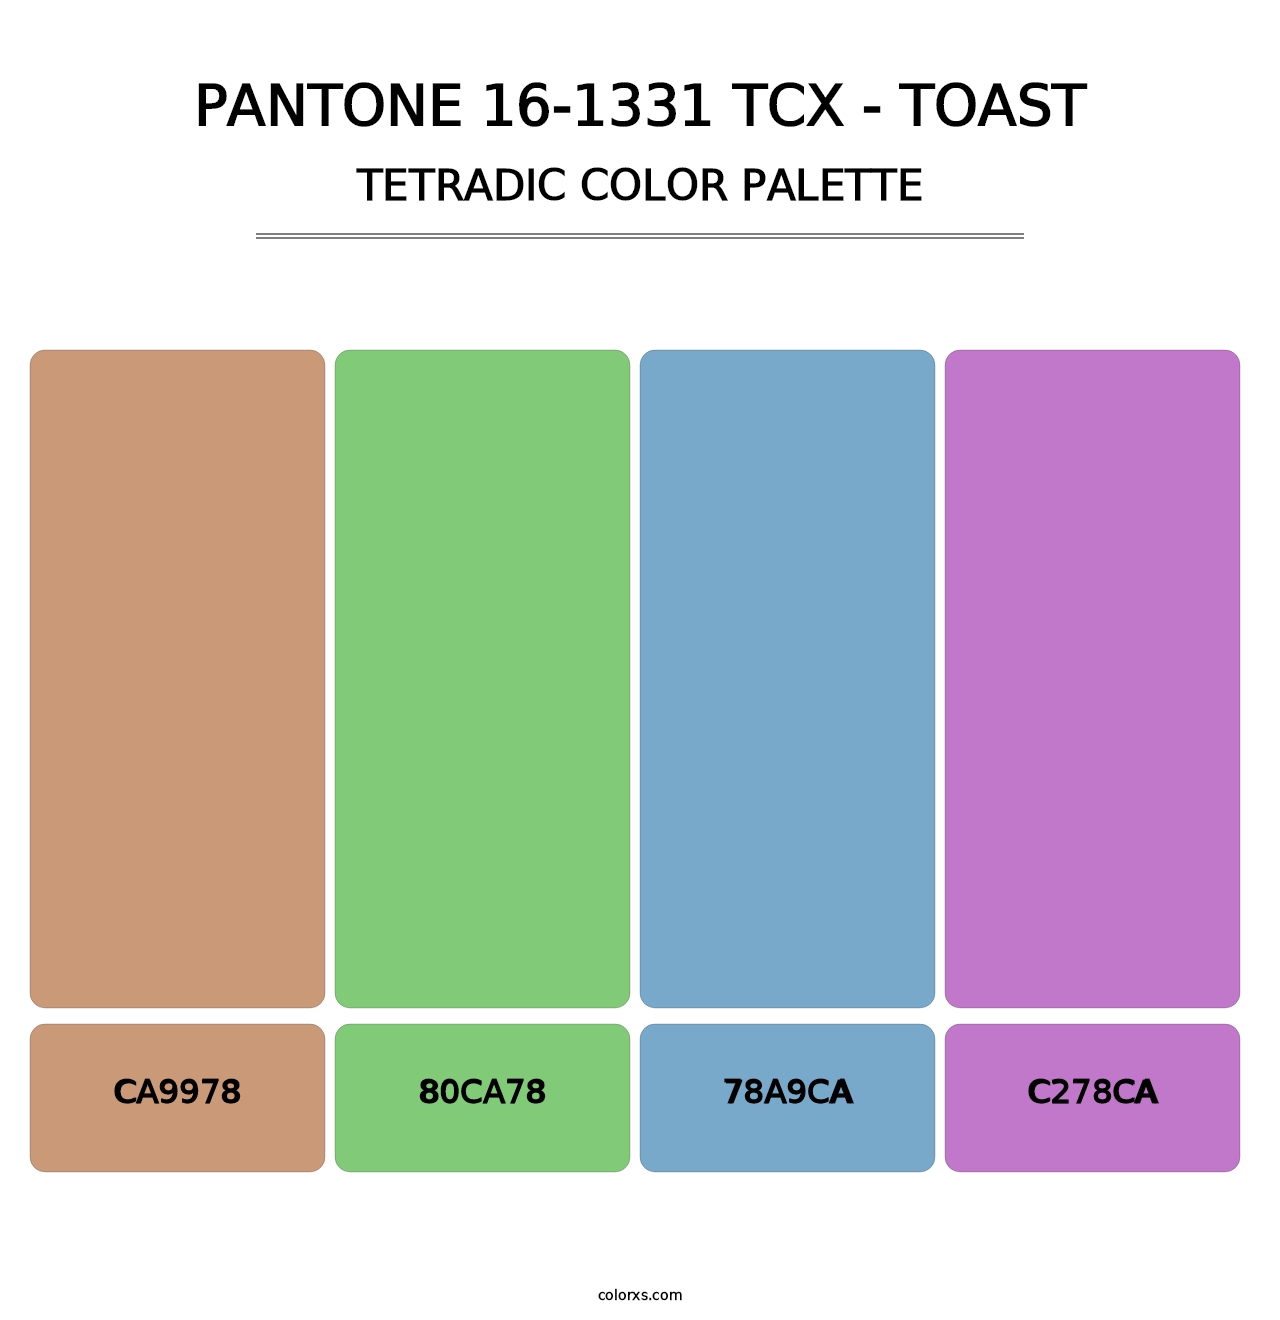 PANTONE 16-1331 TCX - Toast - Tetradic Color Palette